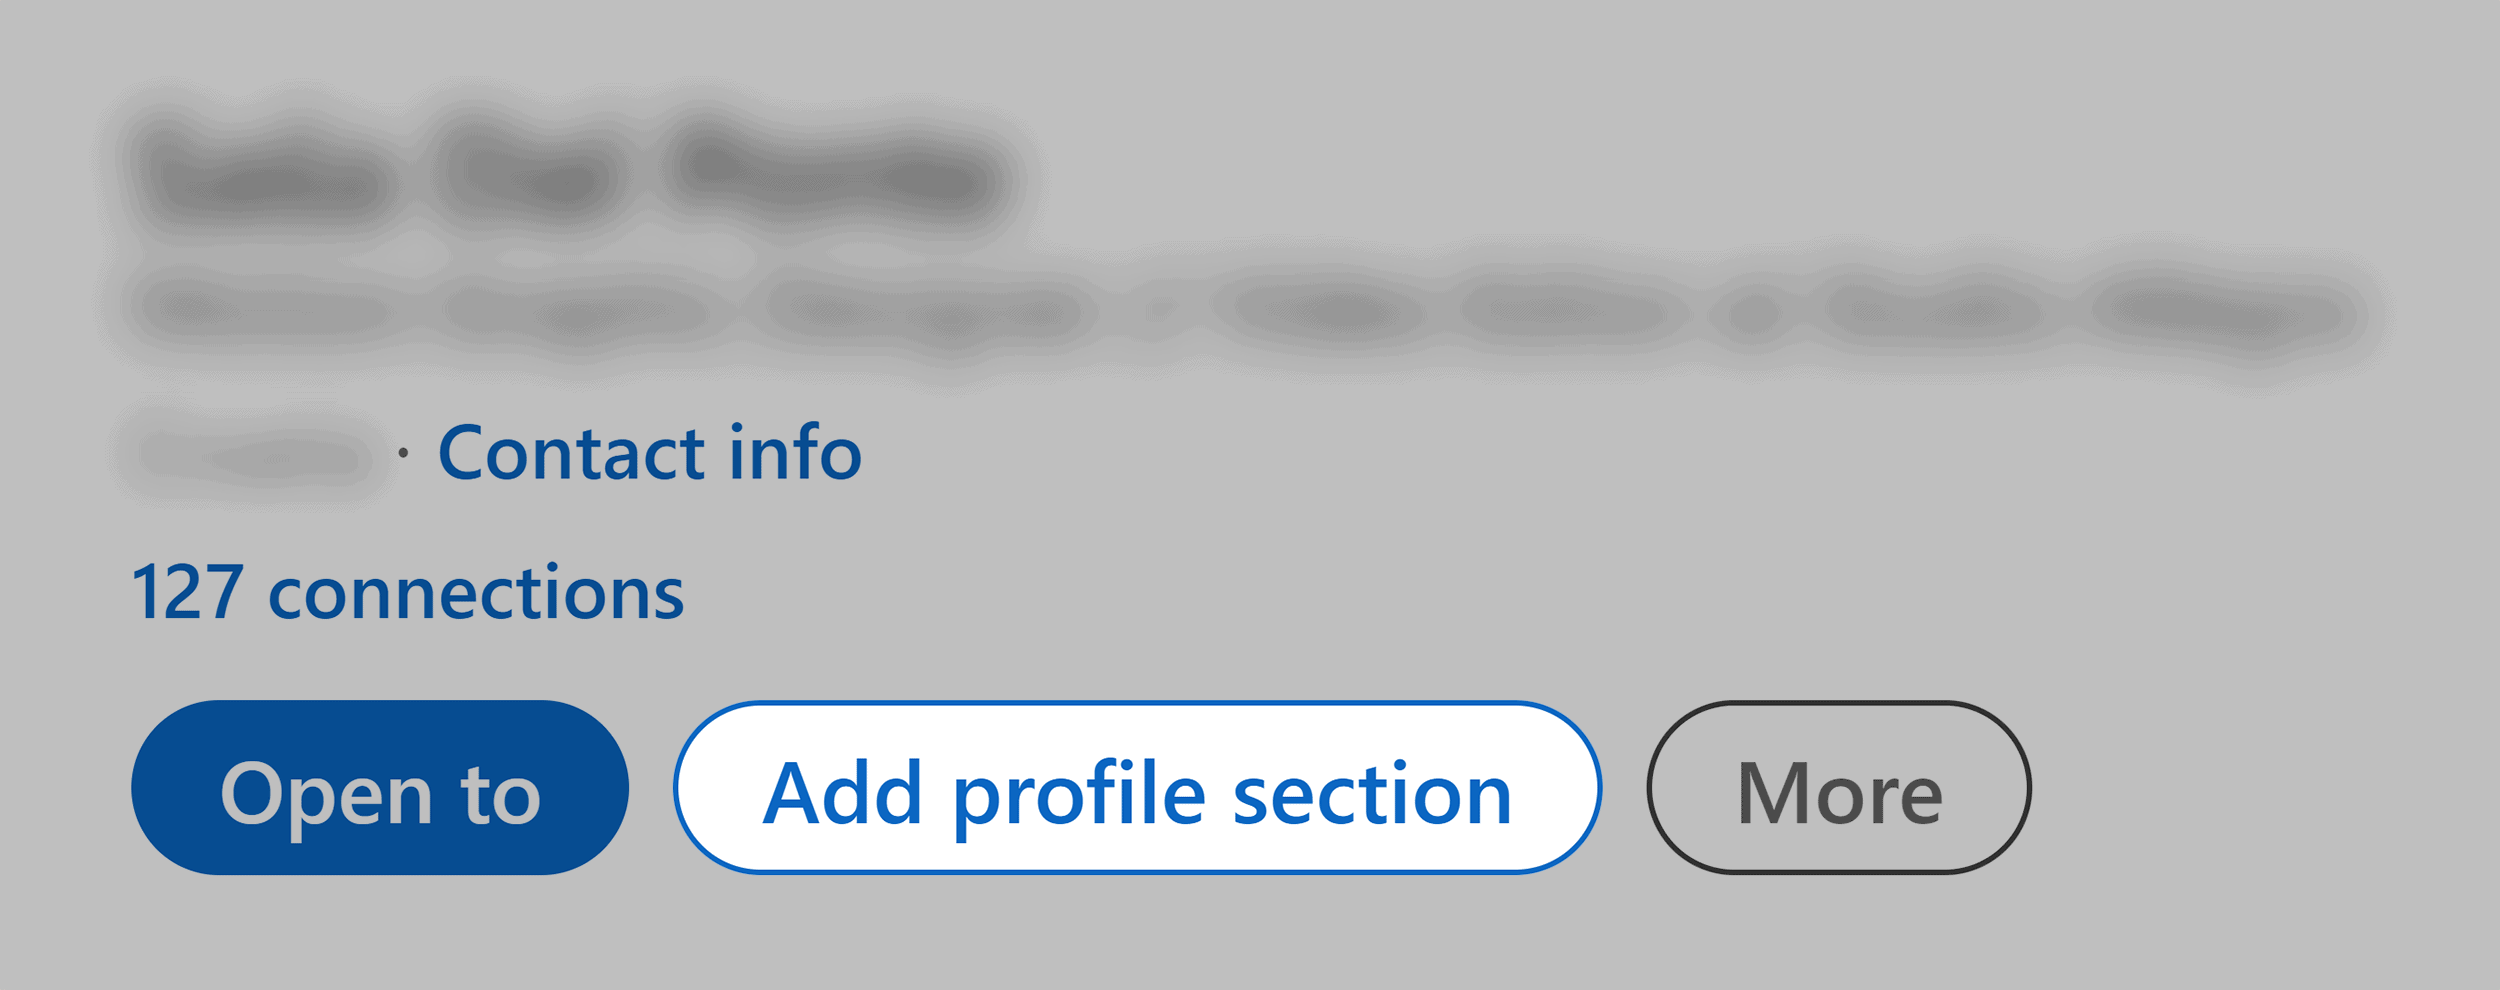 LinkedIn – Add profile section